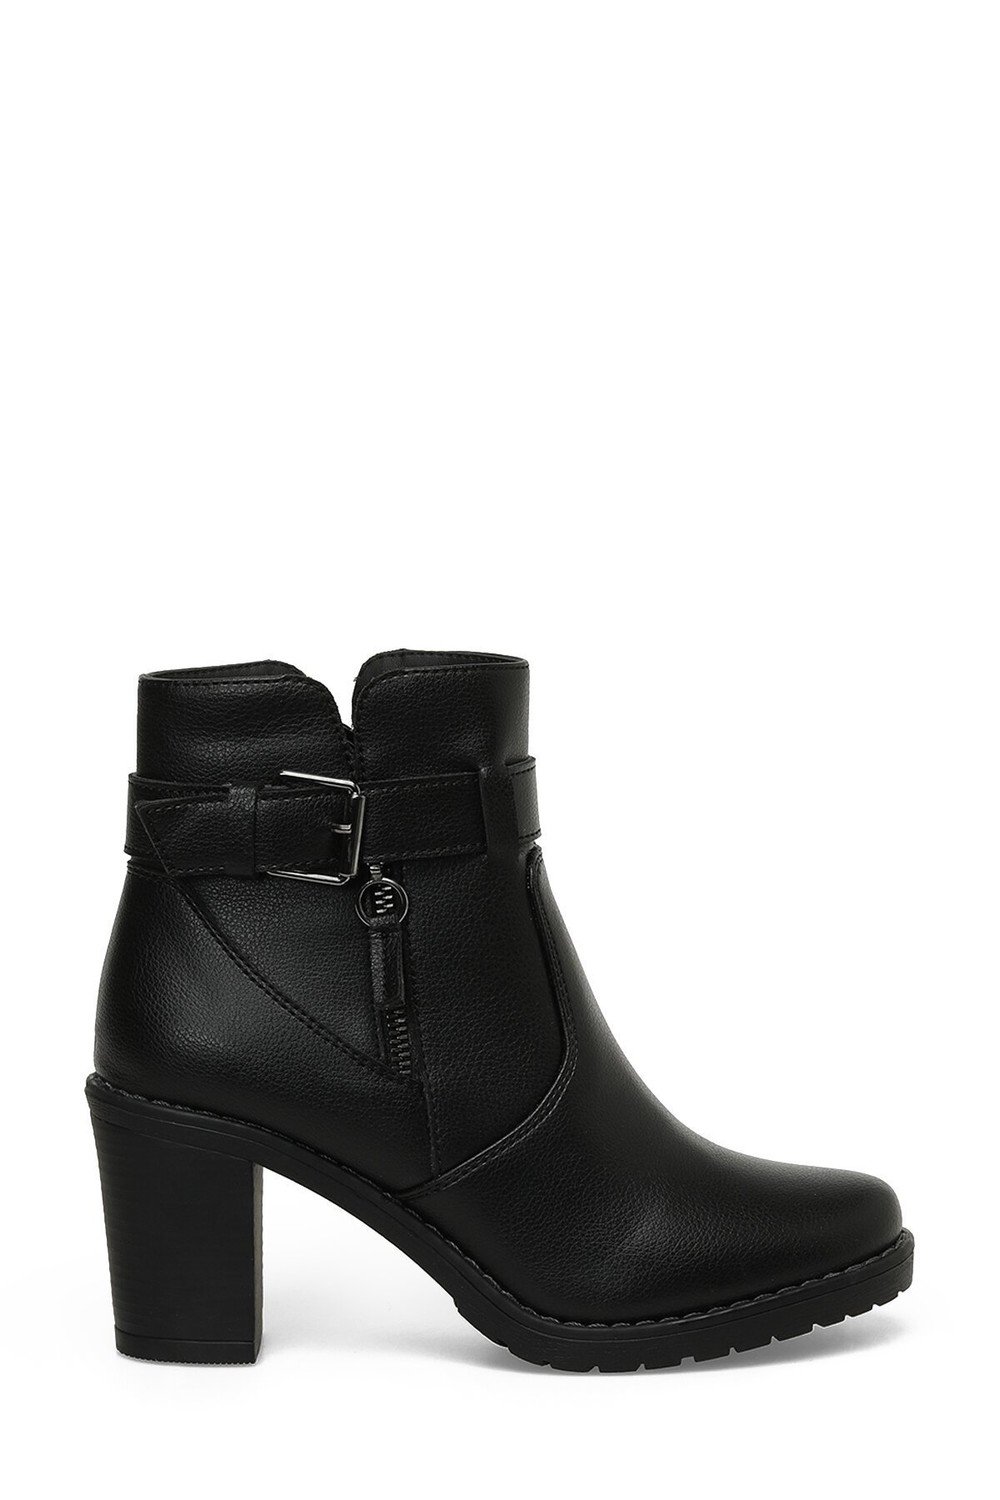 Polaris 318259.Z 3PR Women's Black Heeled Boots